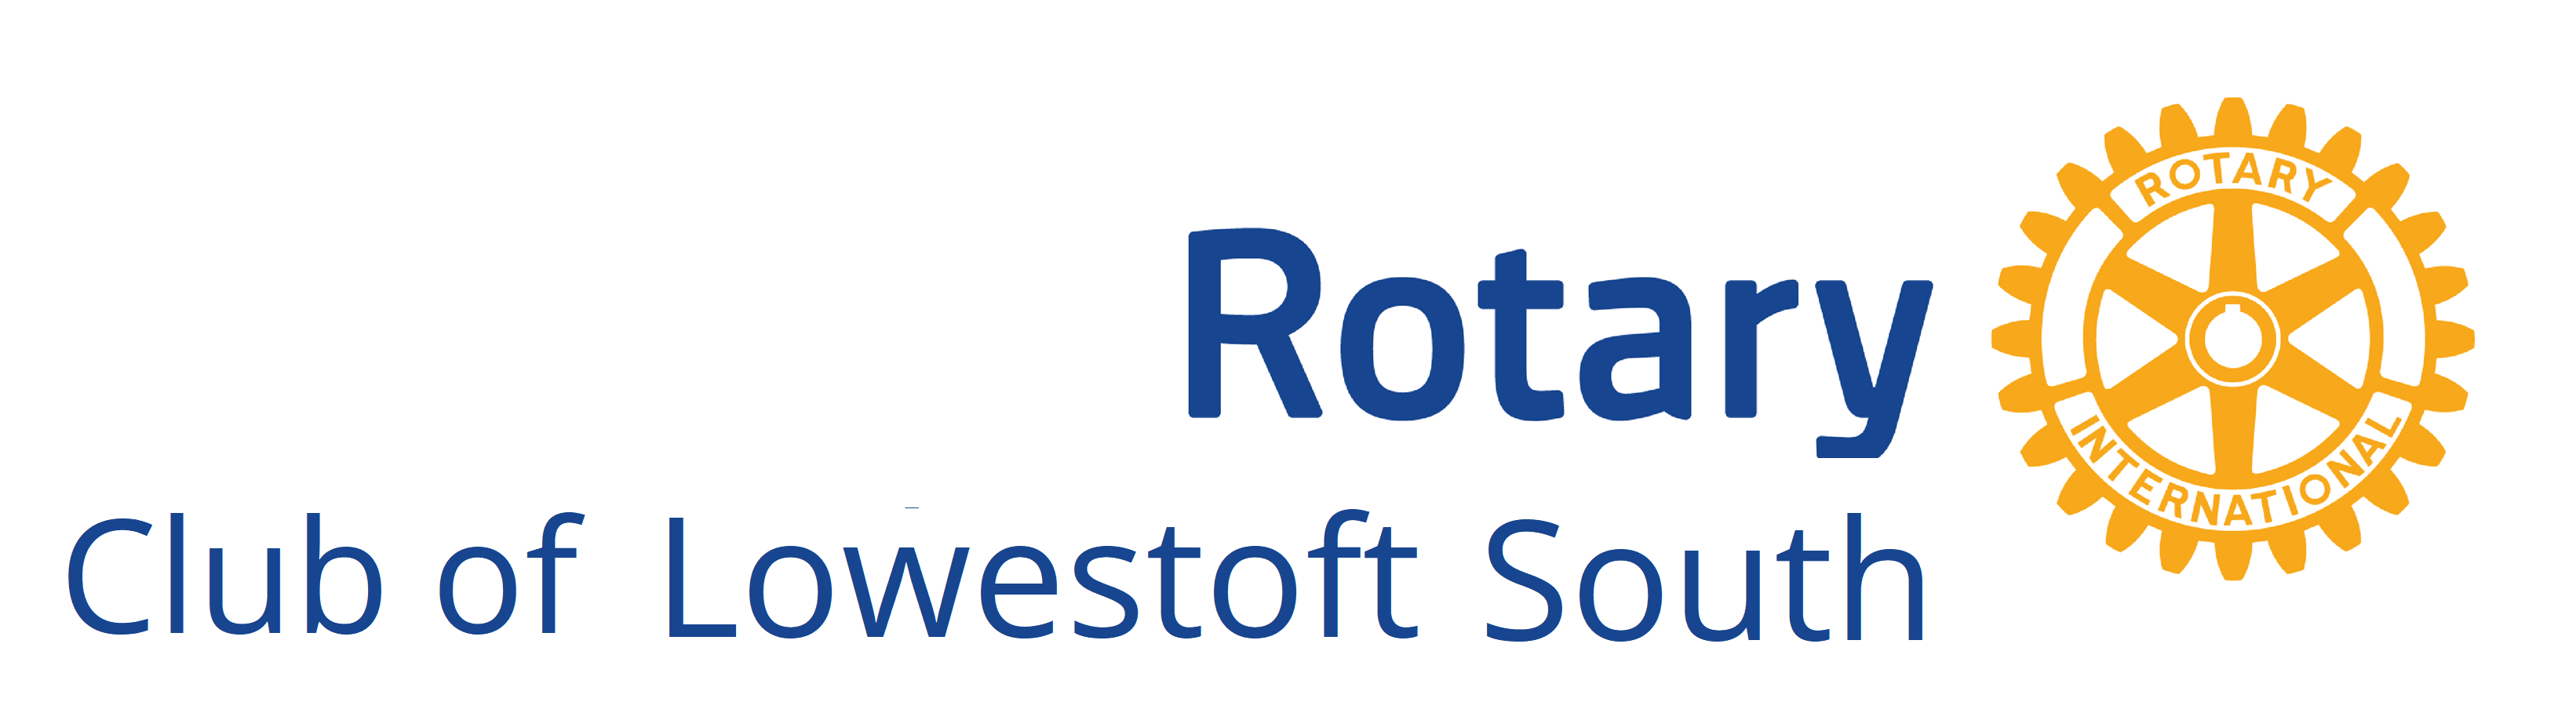 Club logos – Rotary in East Anglia